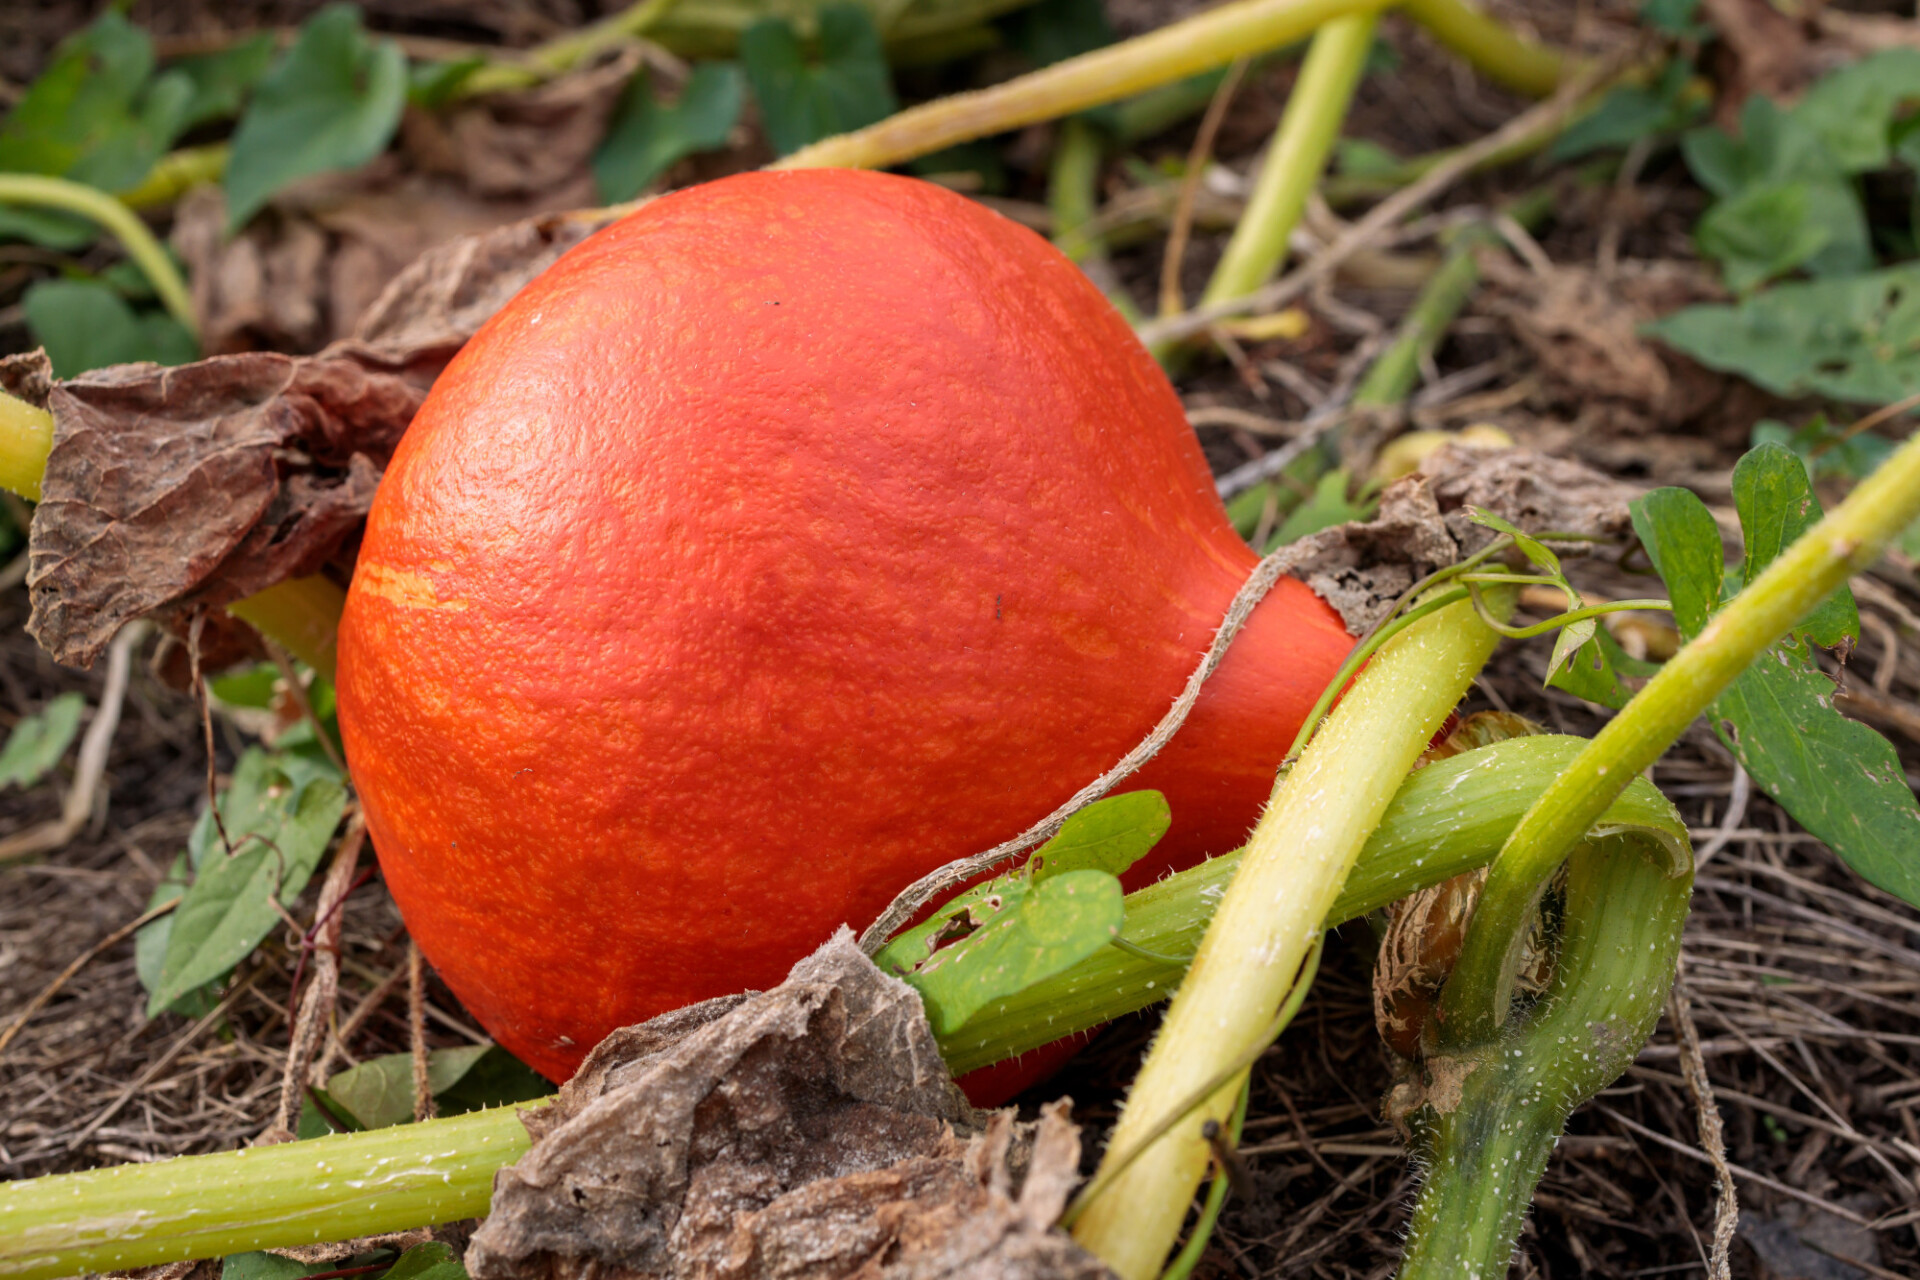 Pumpkin lies in a field and ripens